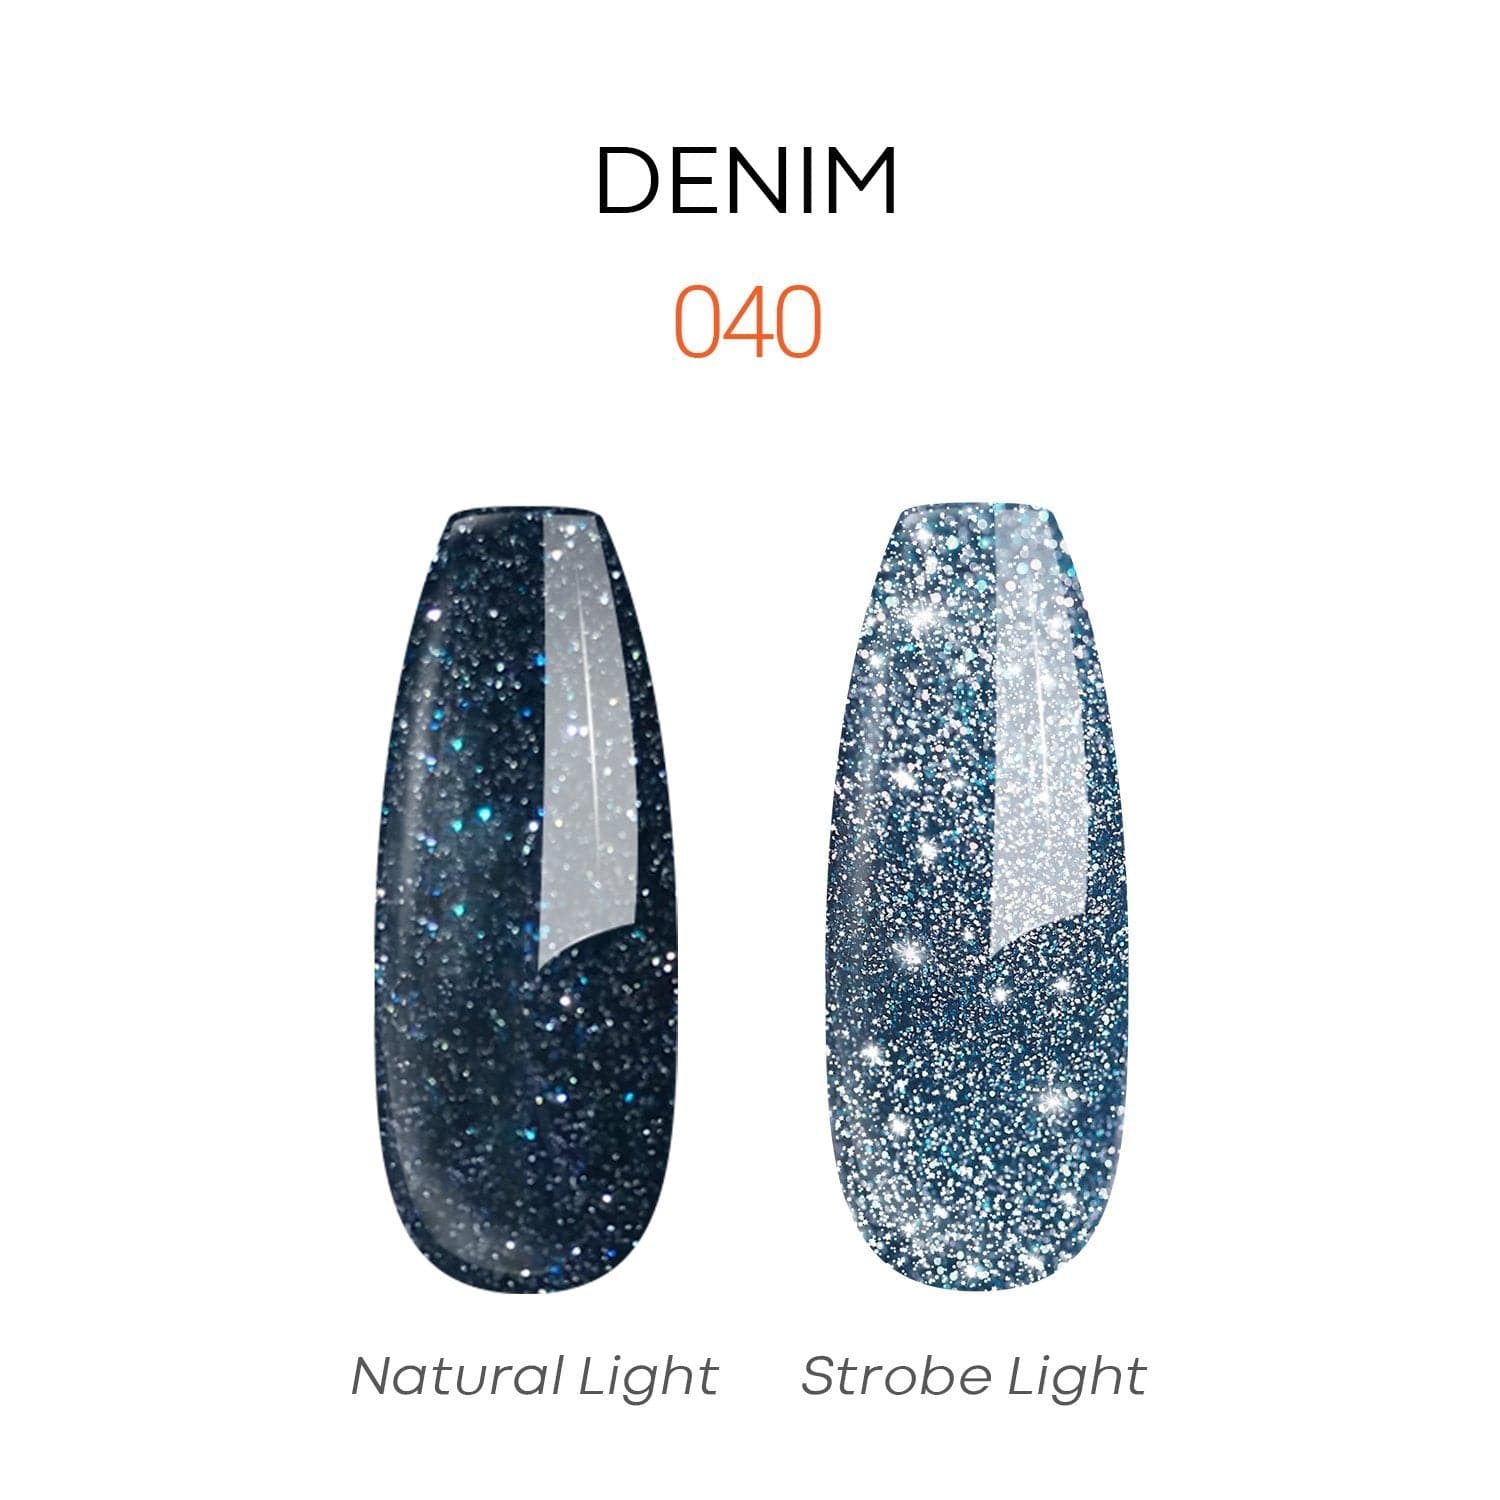 Denim - Reflective Acrylic Powder - MODELONES.com